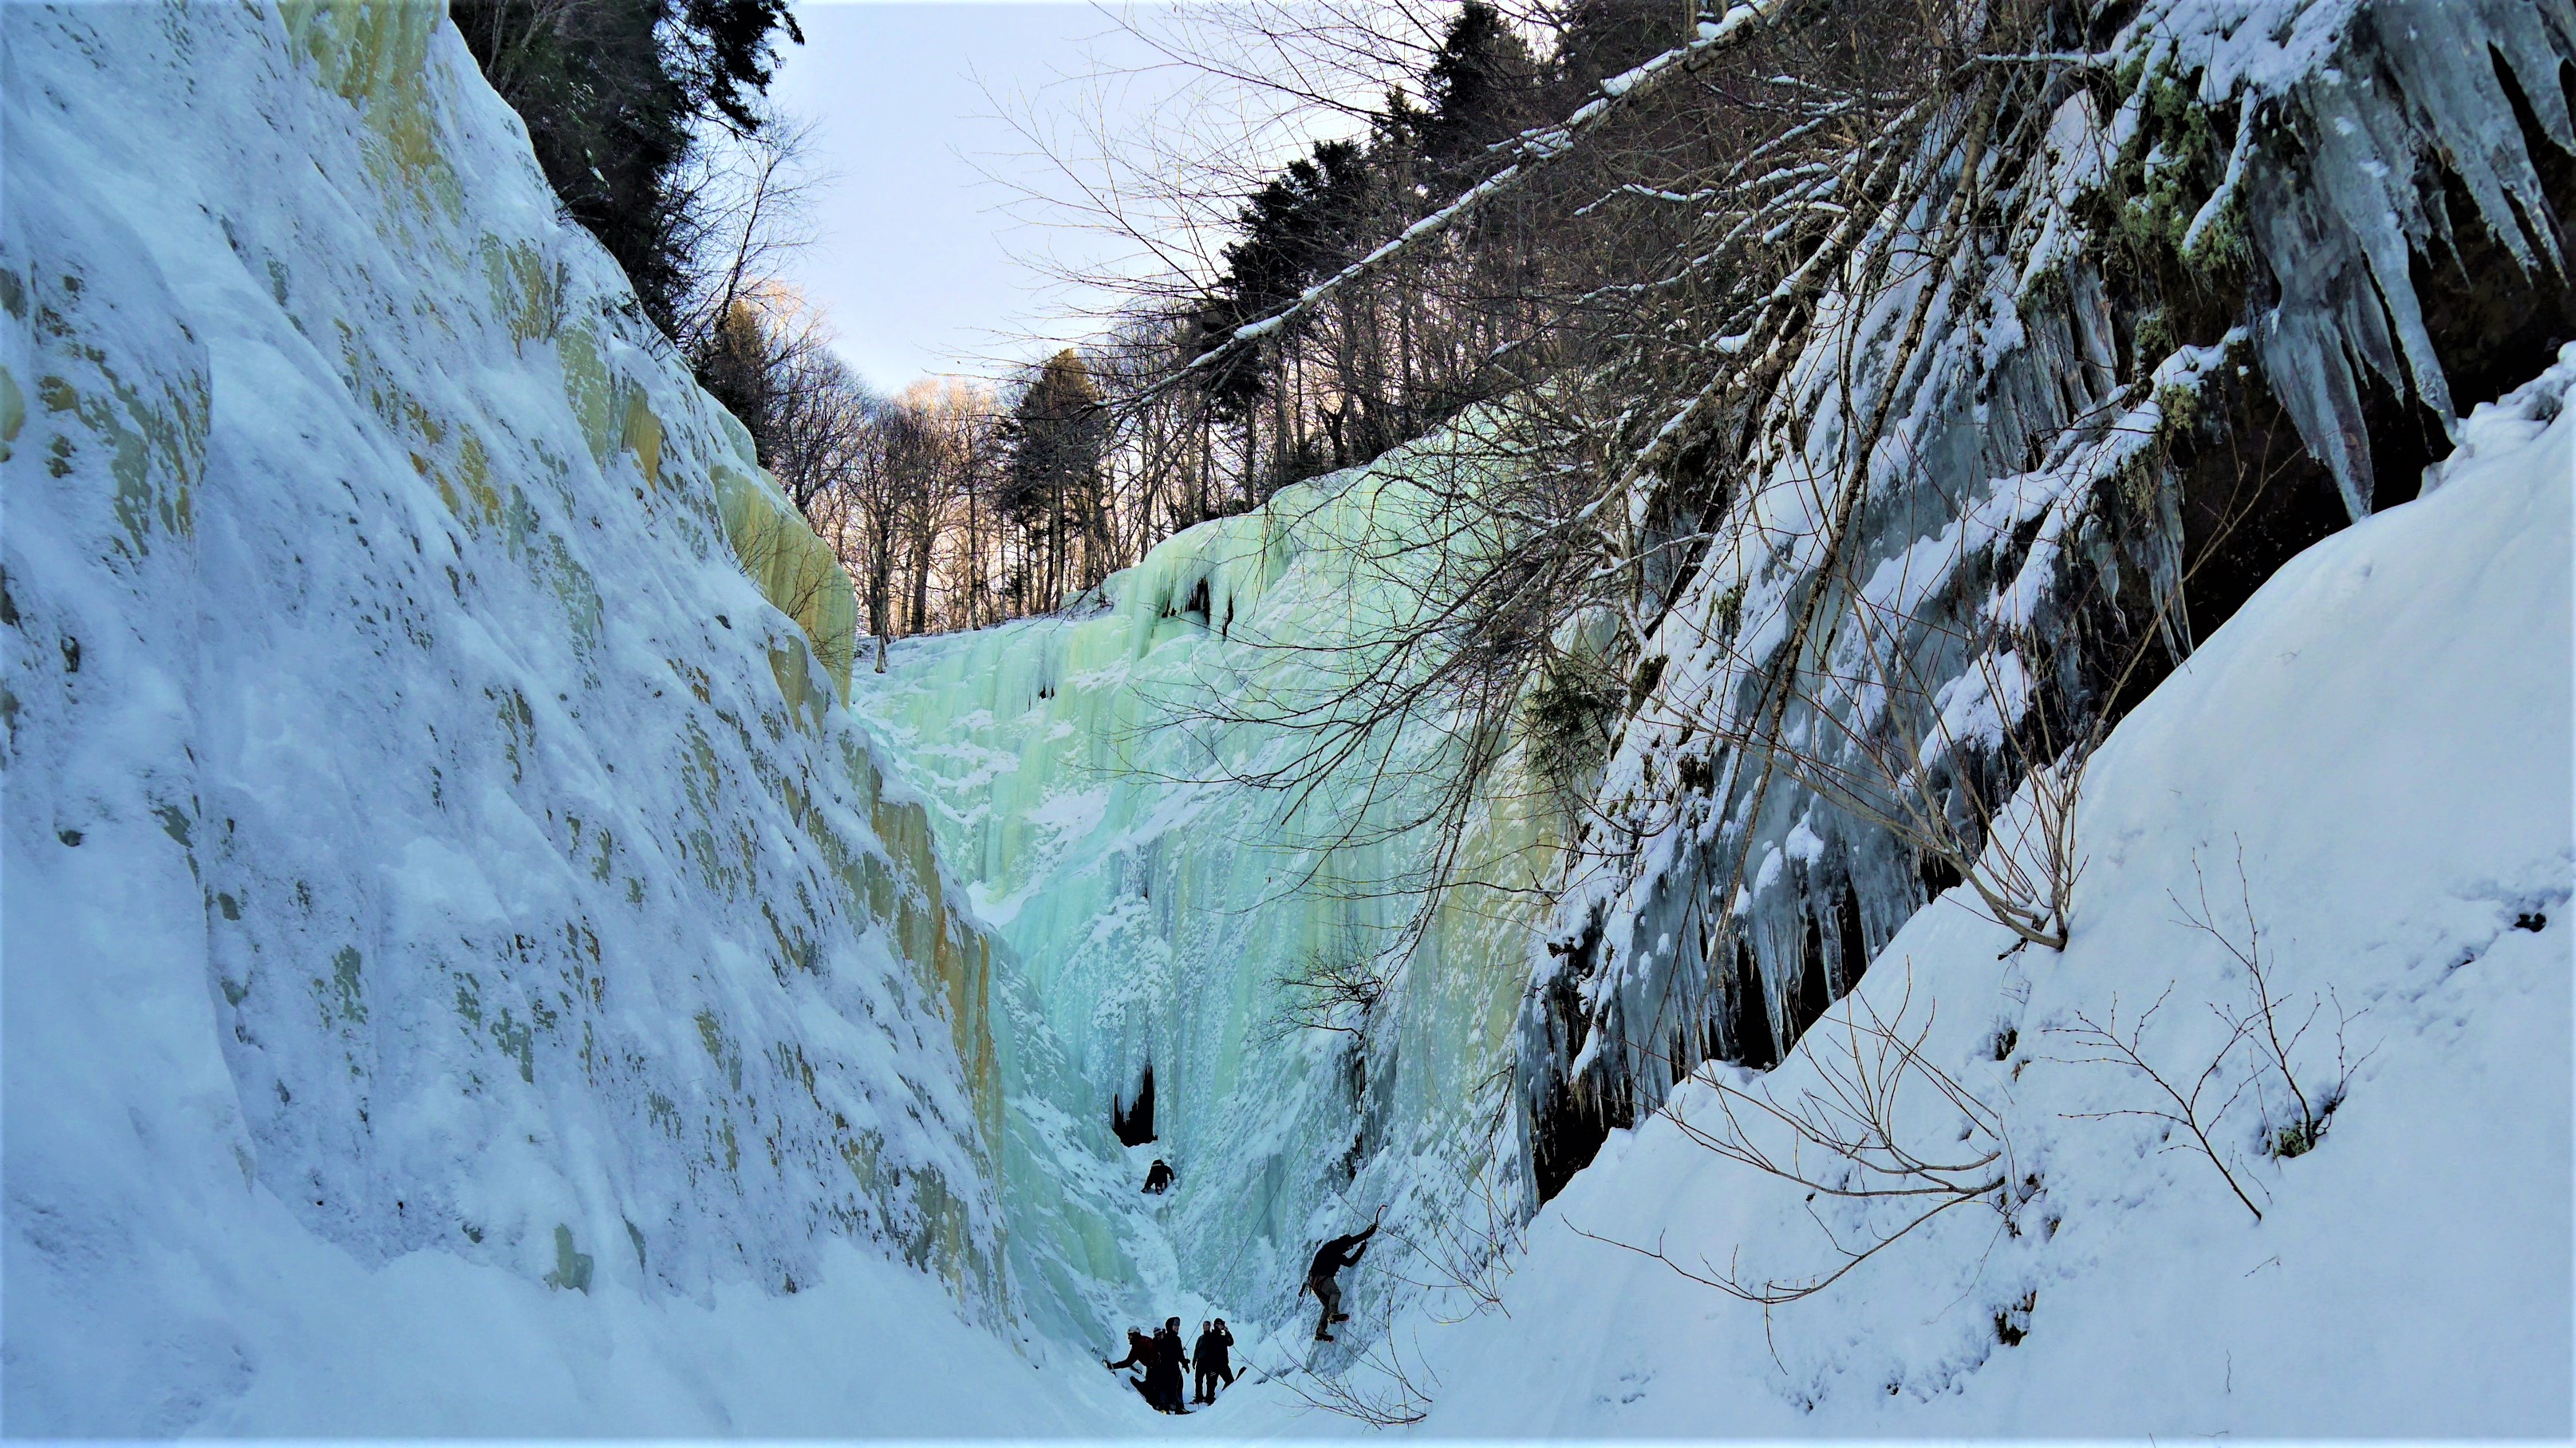 escalade sur glace randonnee hiver parlee brook amphitheatre sussex Nouveau-Brunswick Canada